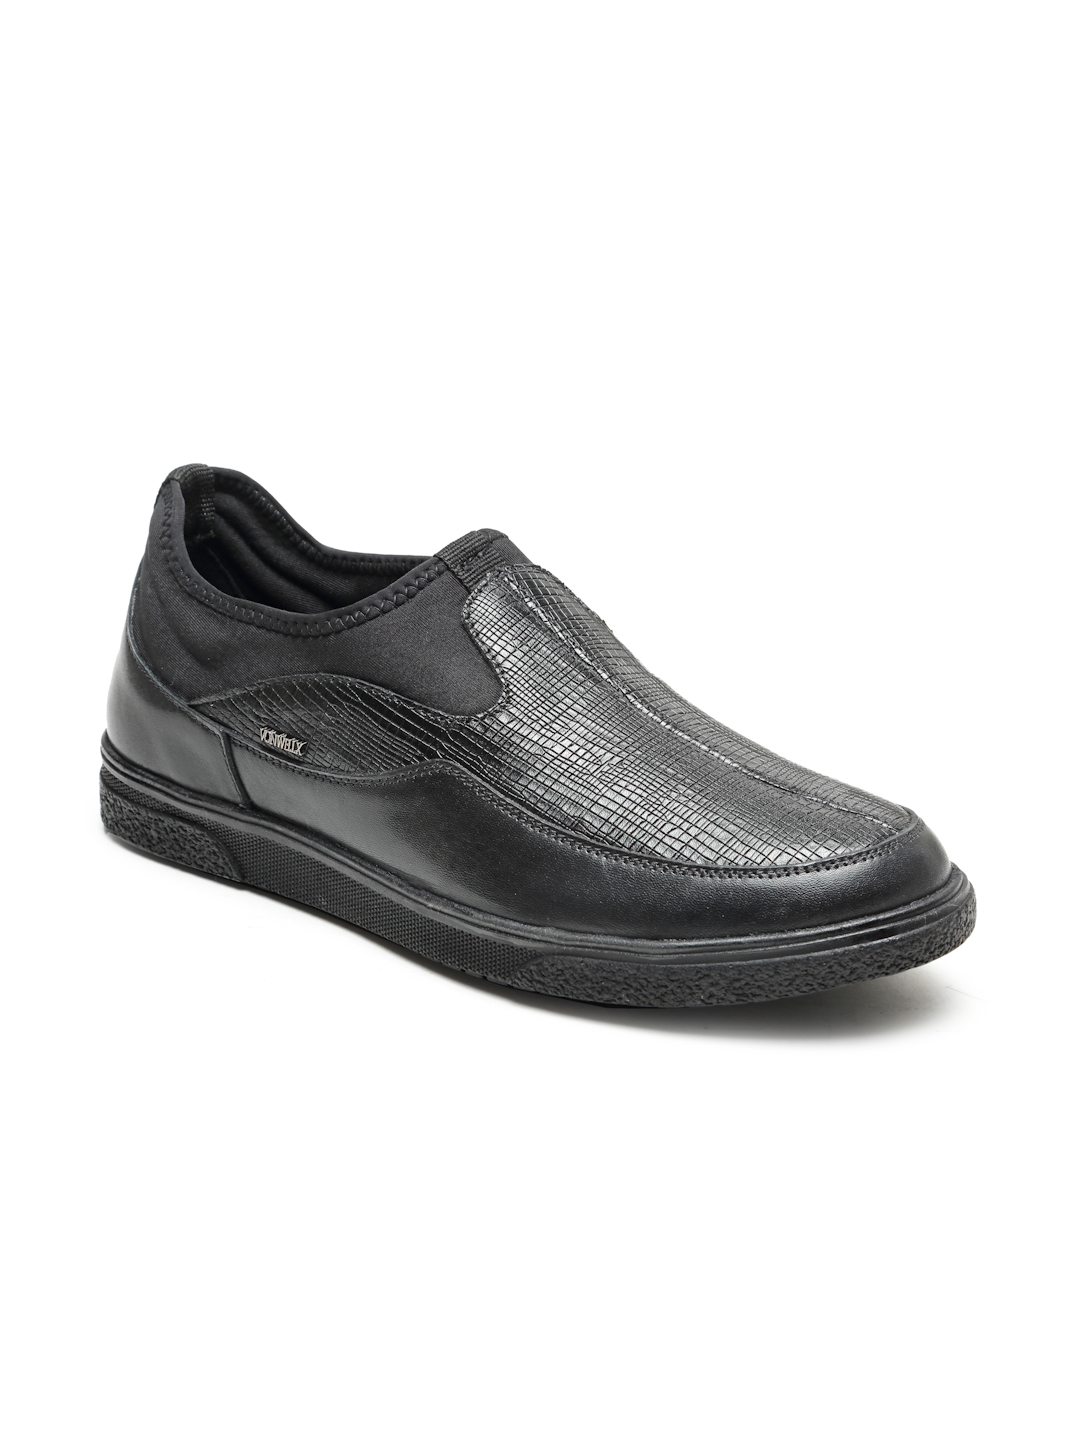 Buy Von Wellx Germany Comfort Men's Black Casual Loafers Everett Online in Udaipur